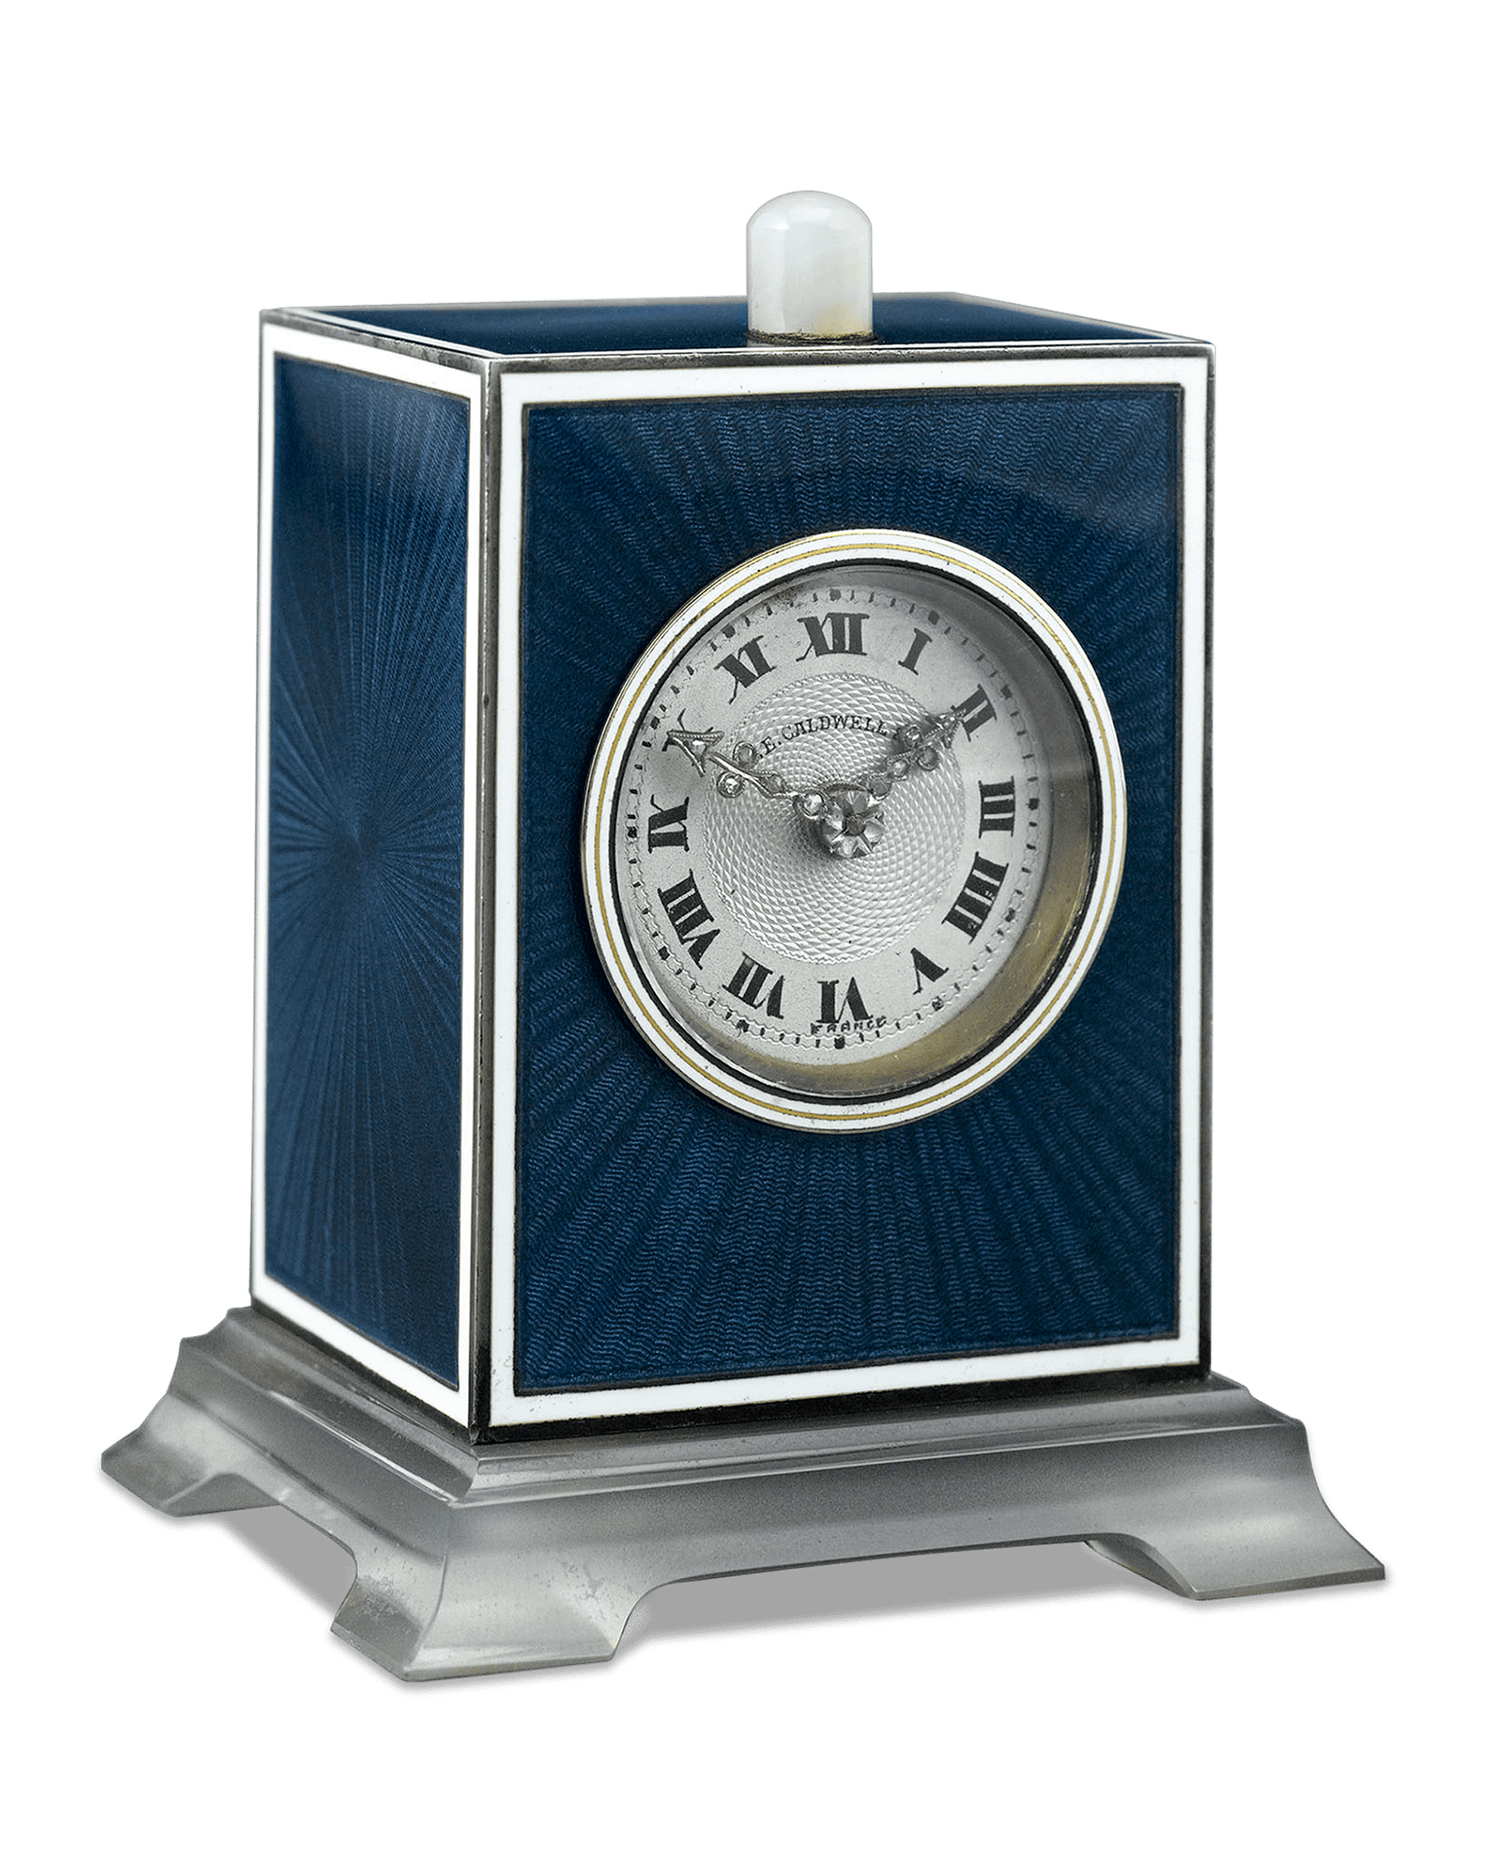 The beautifully designed Art Deco clock exudes a timeless elegance